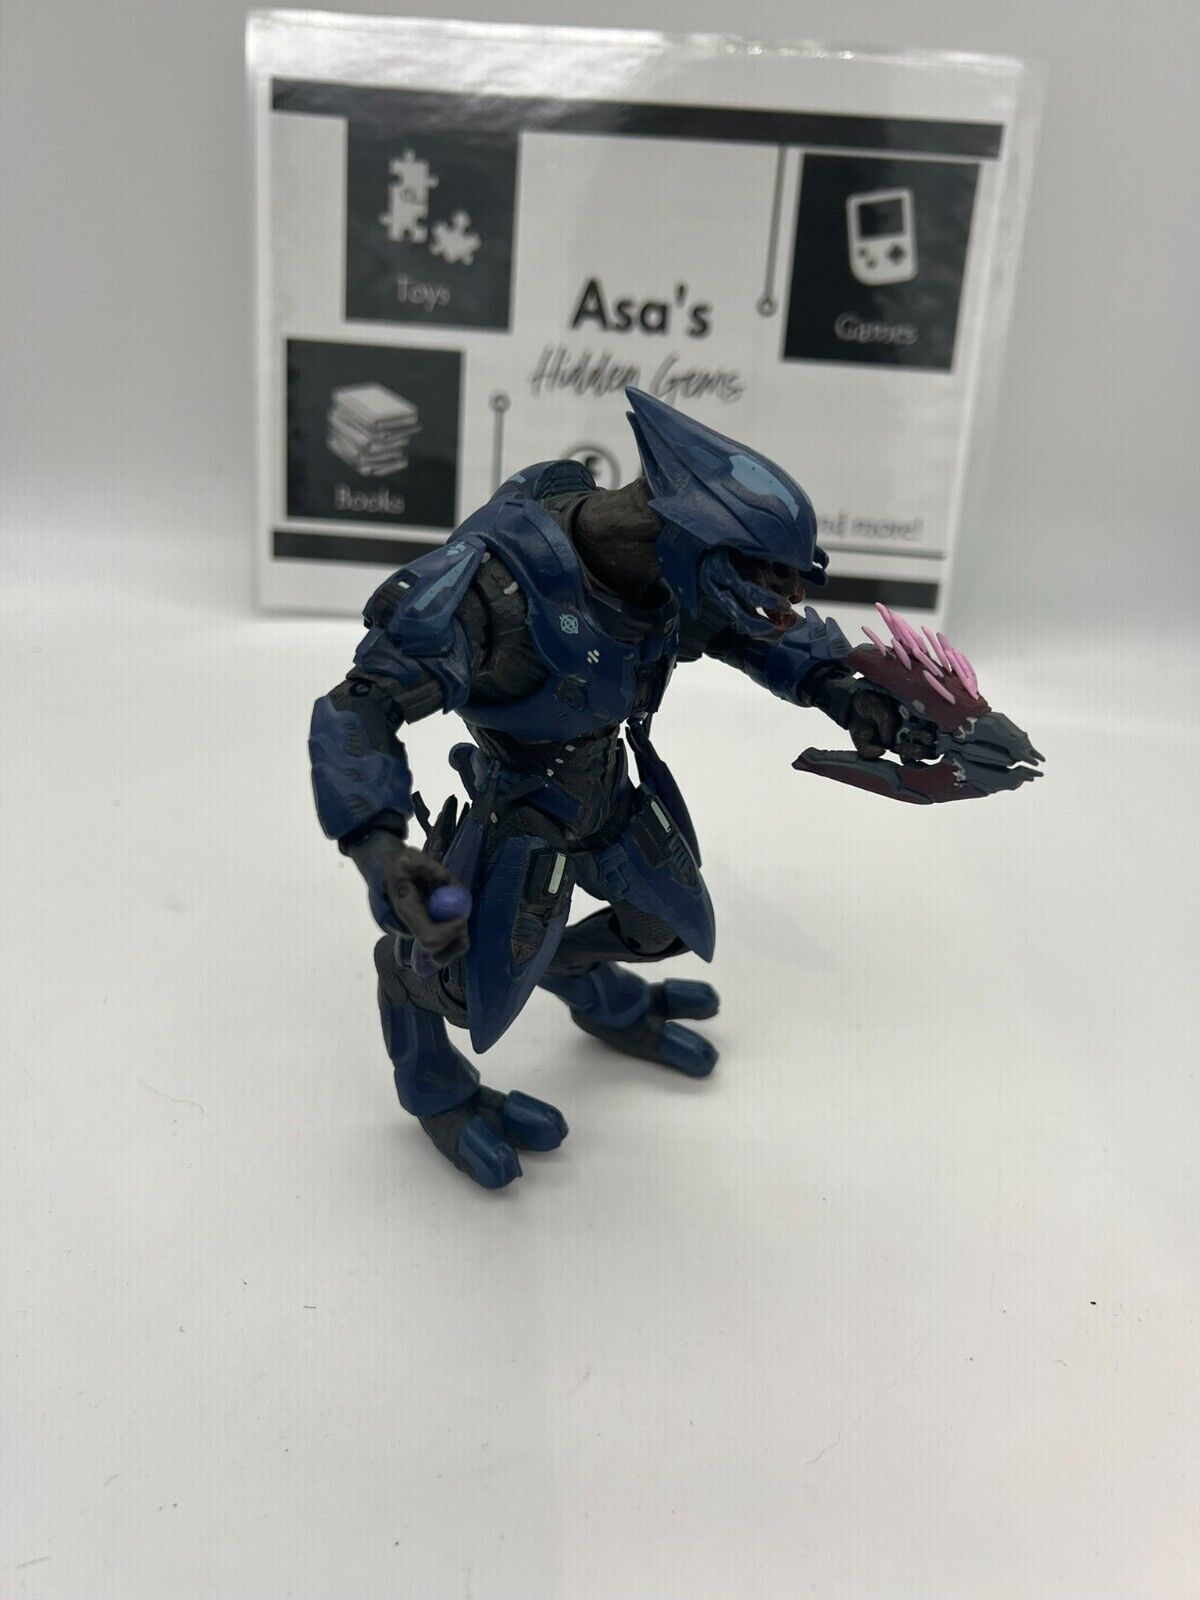 Halo Reach Series 1 Elite Minor Blue McFarlane Figure With multiple accessories